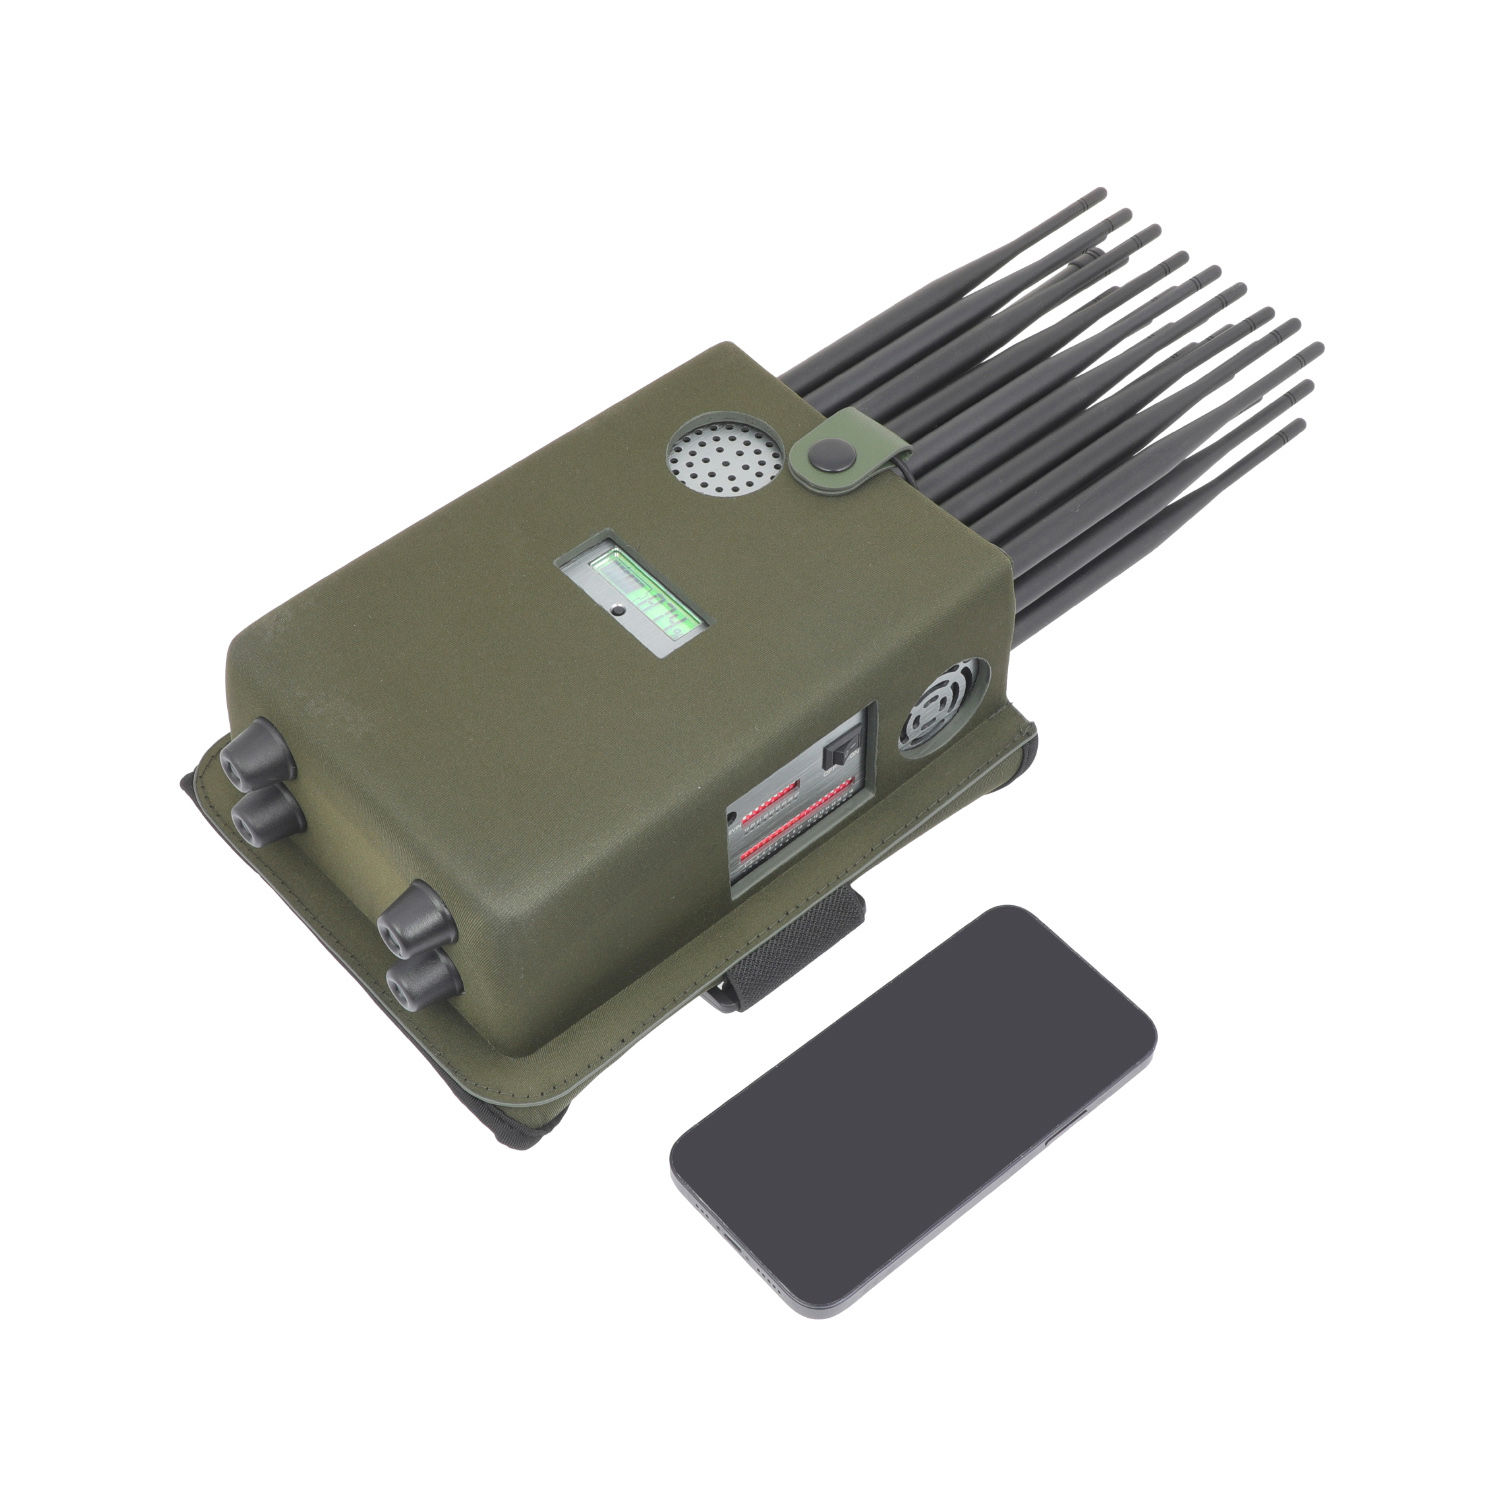 Portable 27 Antennas Signal Jam mErs Shields Gps Lojack Vhf Uhf Wifi2.4g Wifi5.8g Cdma Dcs Gsm2g 3g 4g 5g Mobile Signal Iso lator